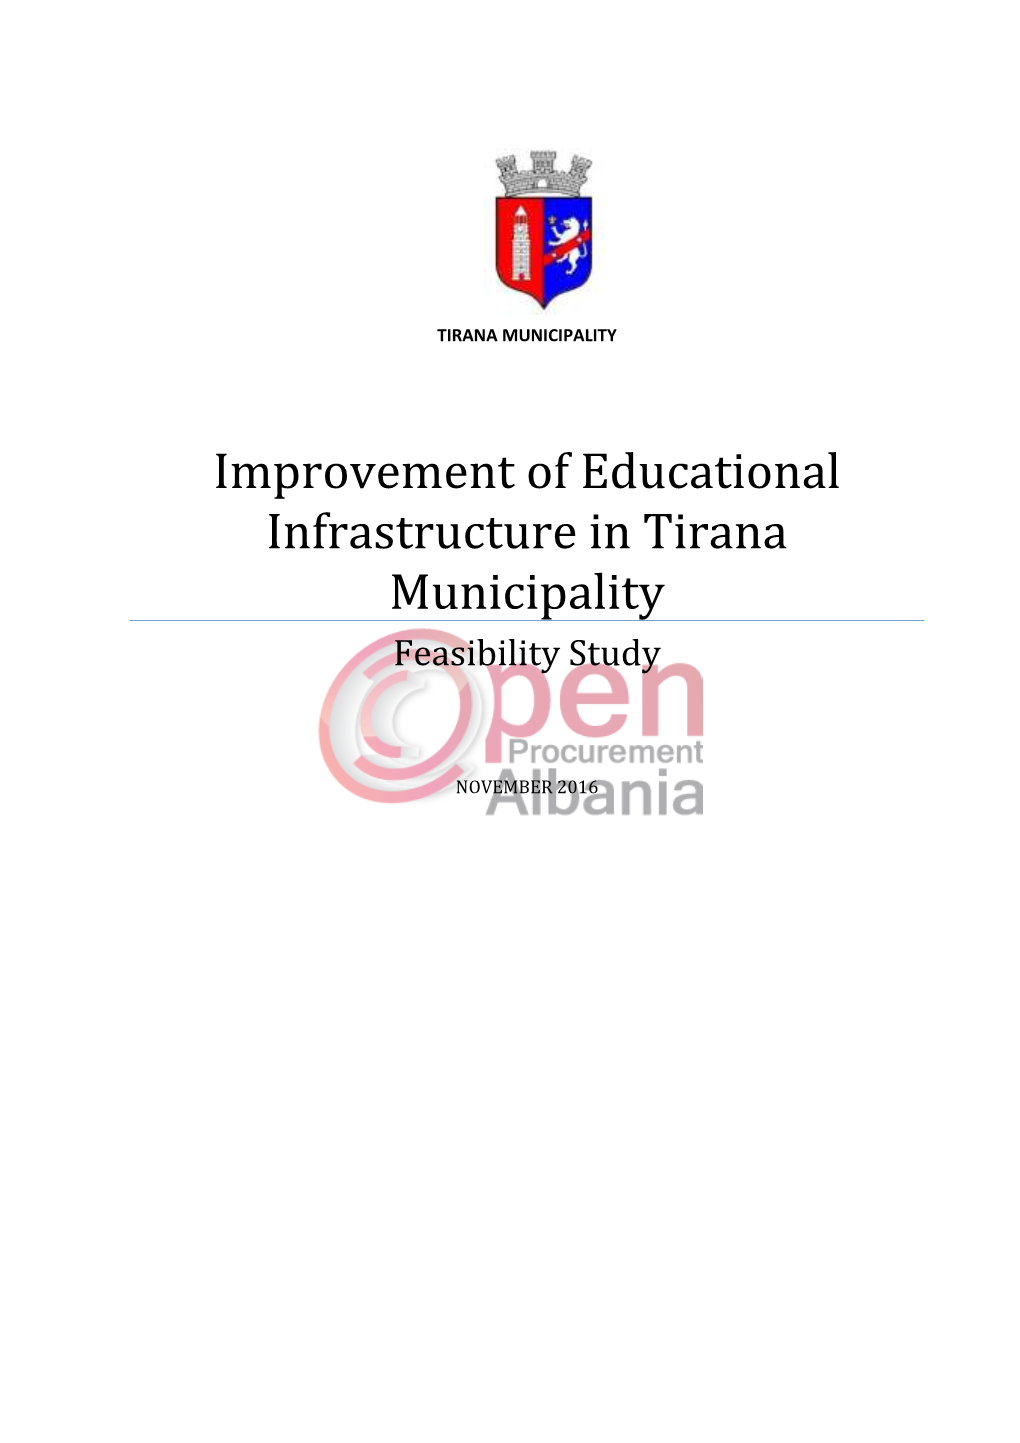 Improvement of Educational Infrastructure in Tirana Municipality Feasibility Study